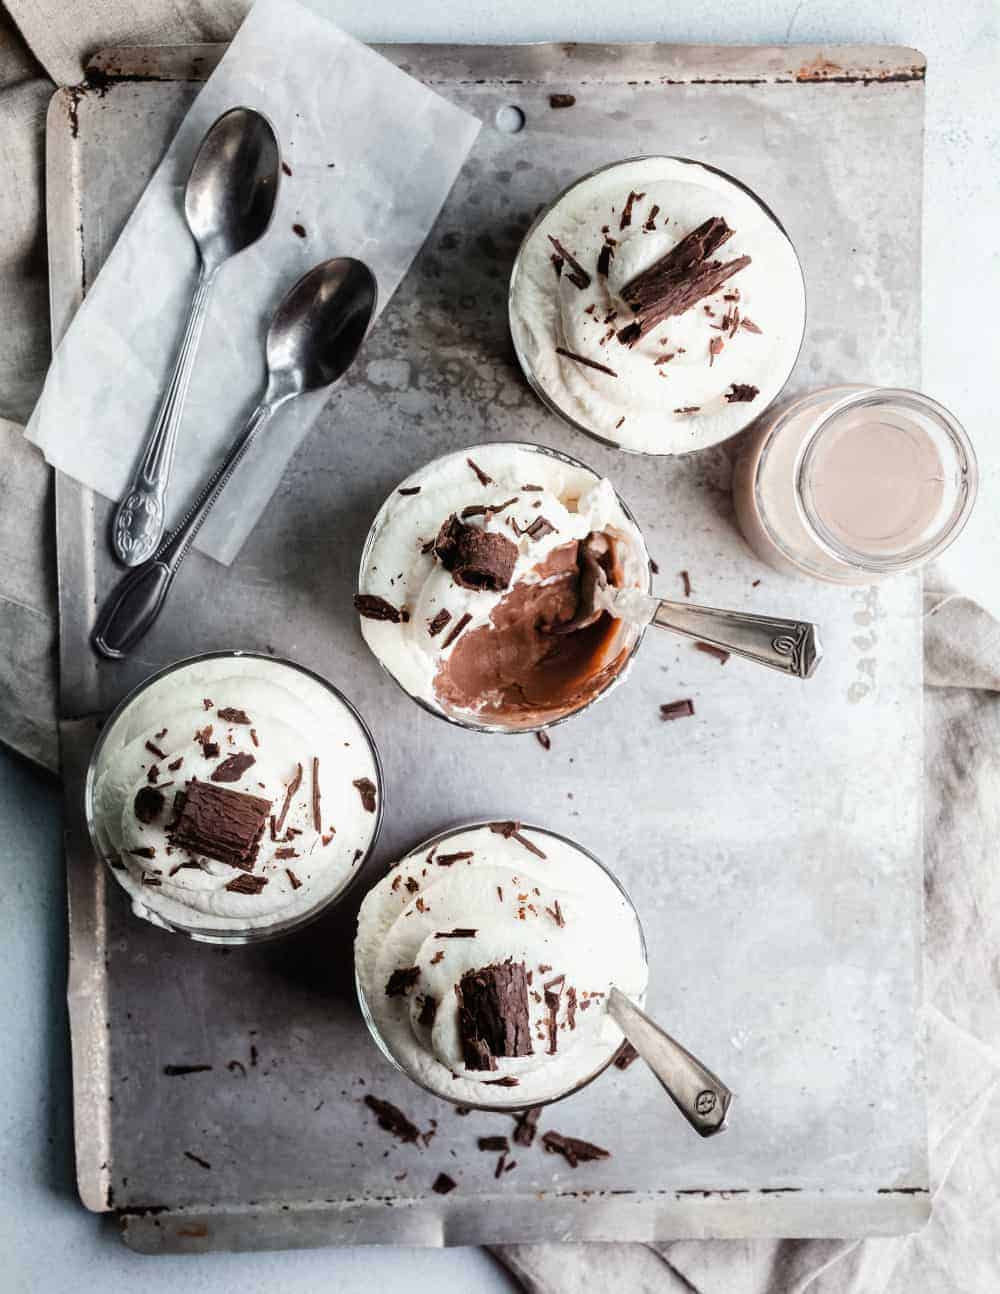 Homemade Chocolate Pudding With Baileys Irish Cream My Baking Addiction,Lemon Drop Shots In Bulk